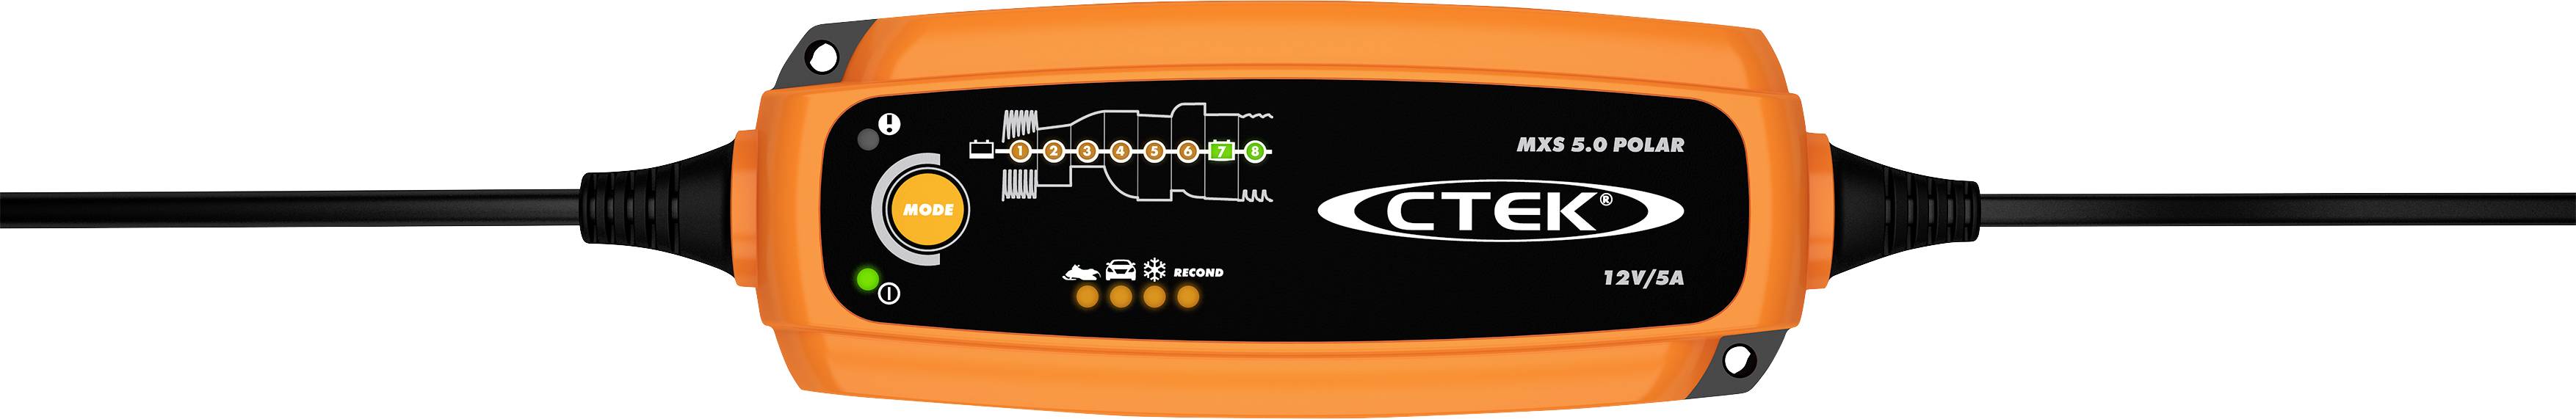 CTEK MXS 5.0 Polar 56-855 Caricatore automatico 12 V 0.8 A, 5 A